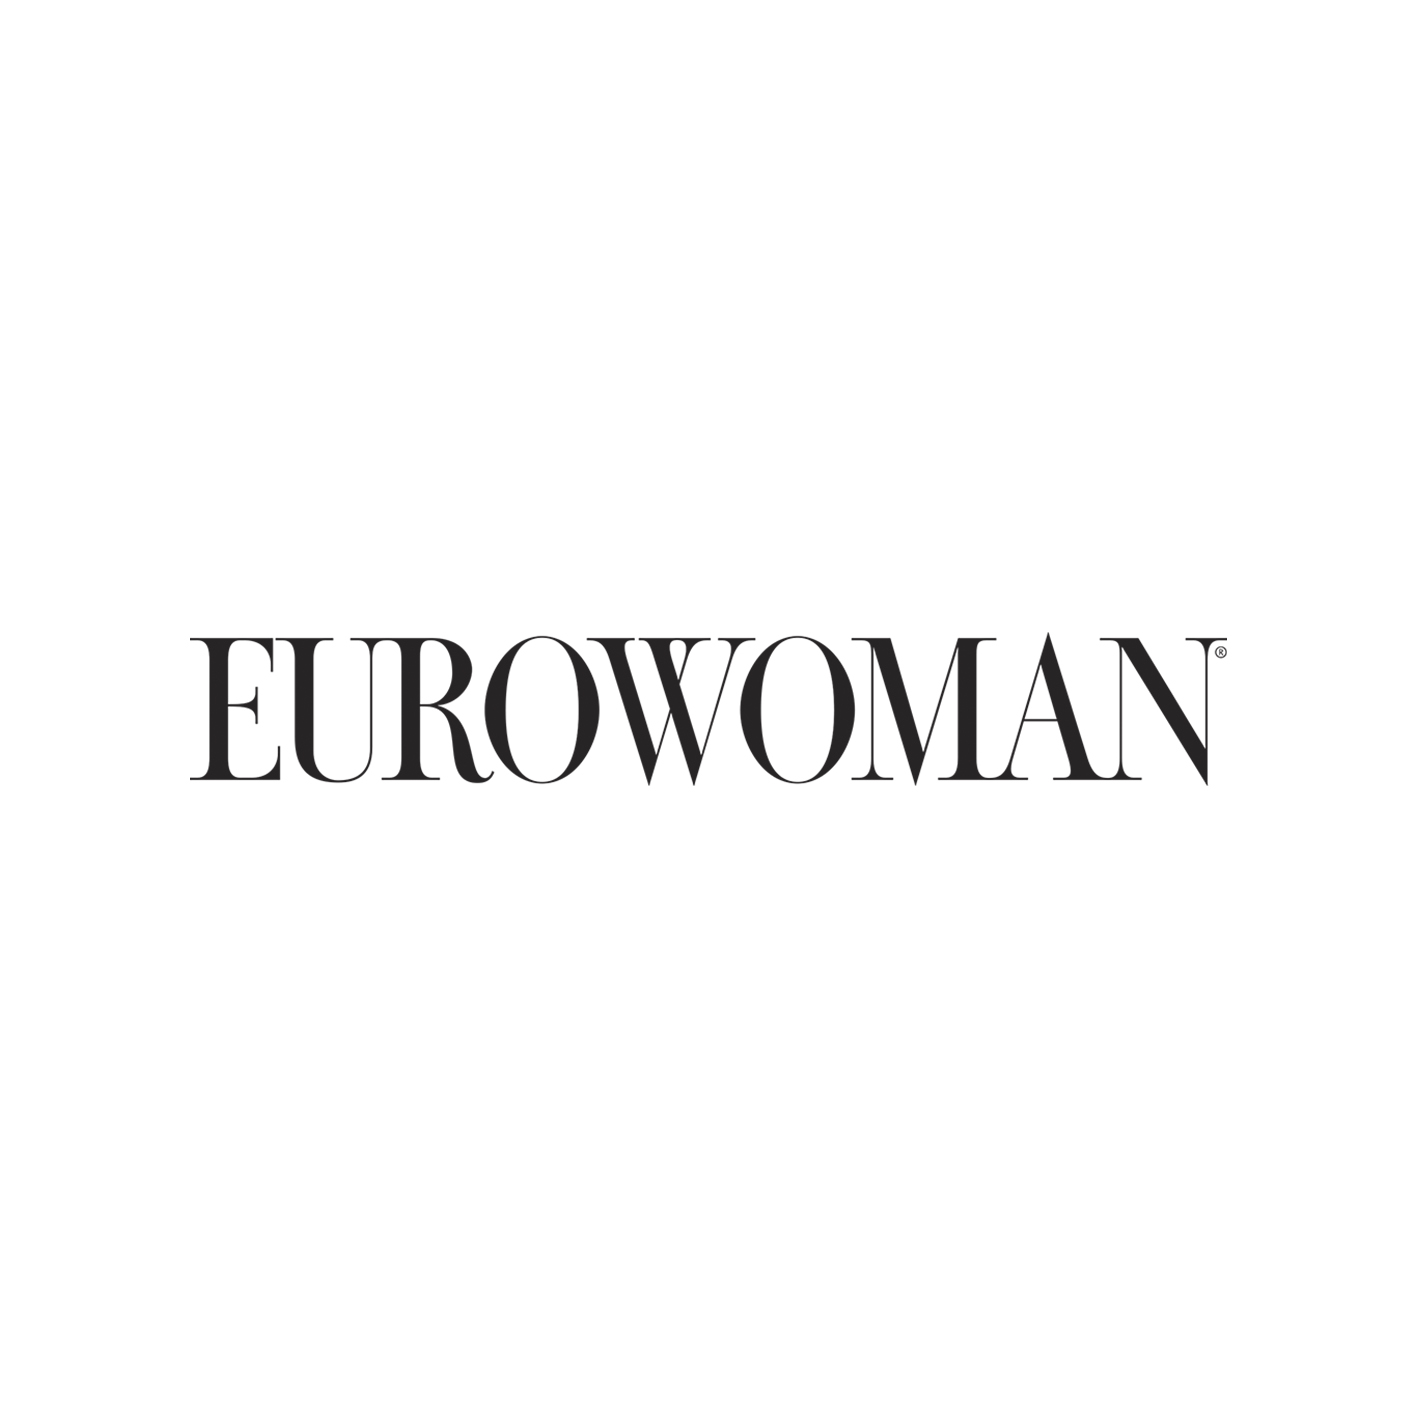 Eurowoman logo